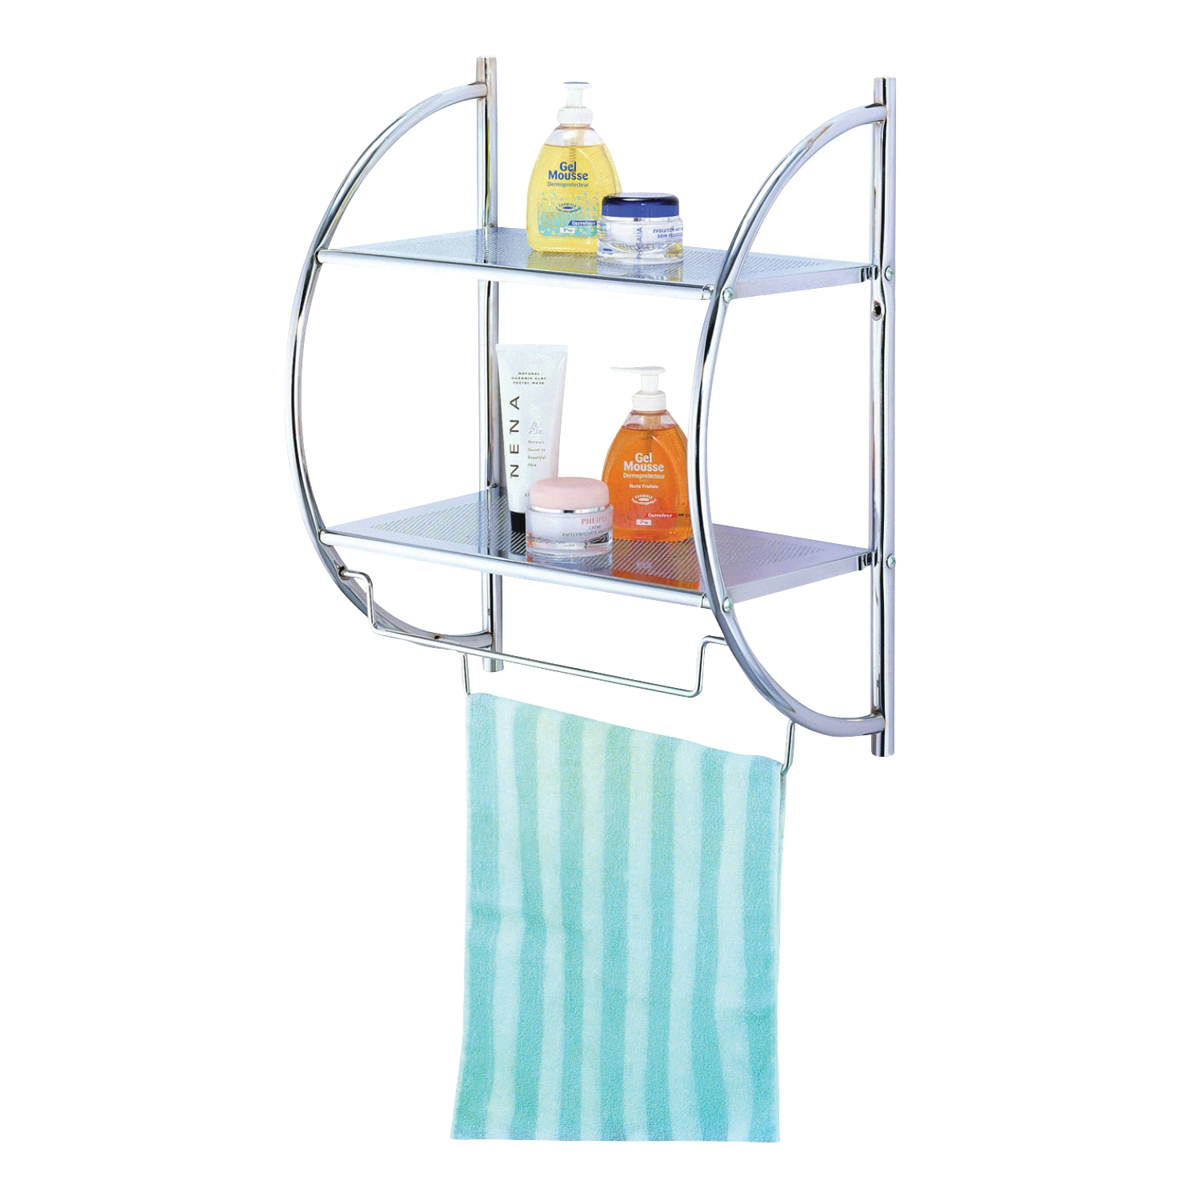 Y19-CH Bathroom Rack, 8.8 lb Each Shelf, 8.8 lb Each Towel Rack Max Weight Capacity, 1-Shelf, Metal